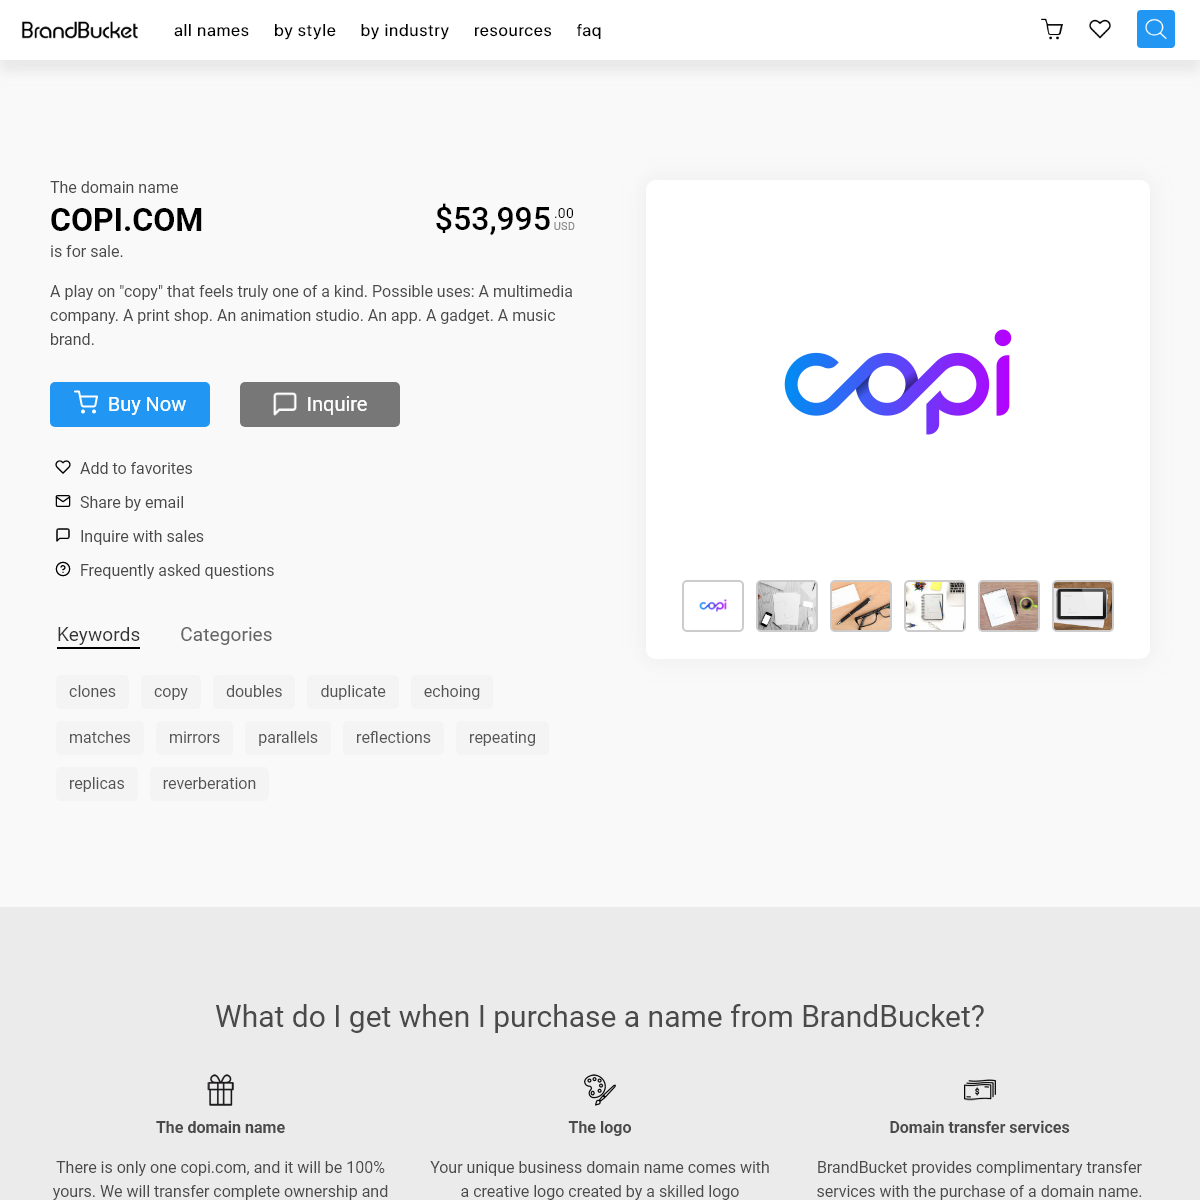 A complete backup of copi.com